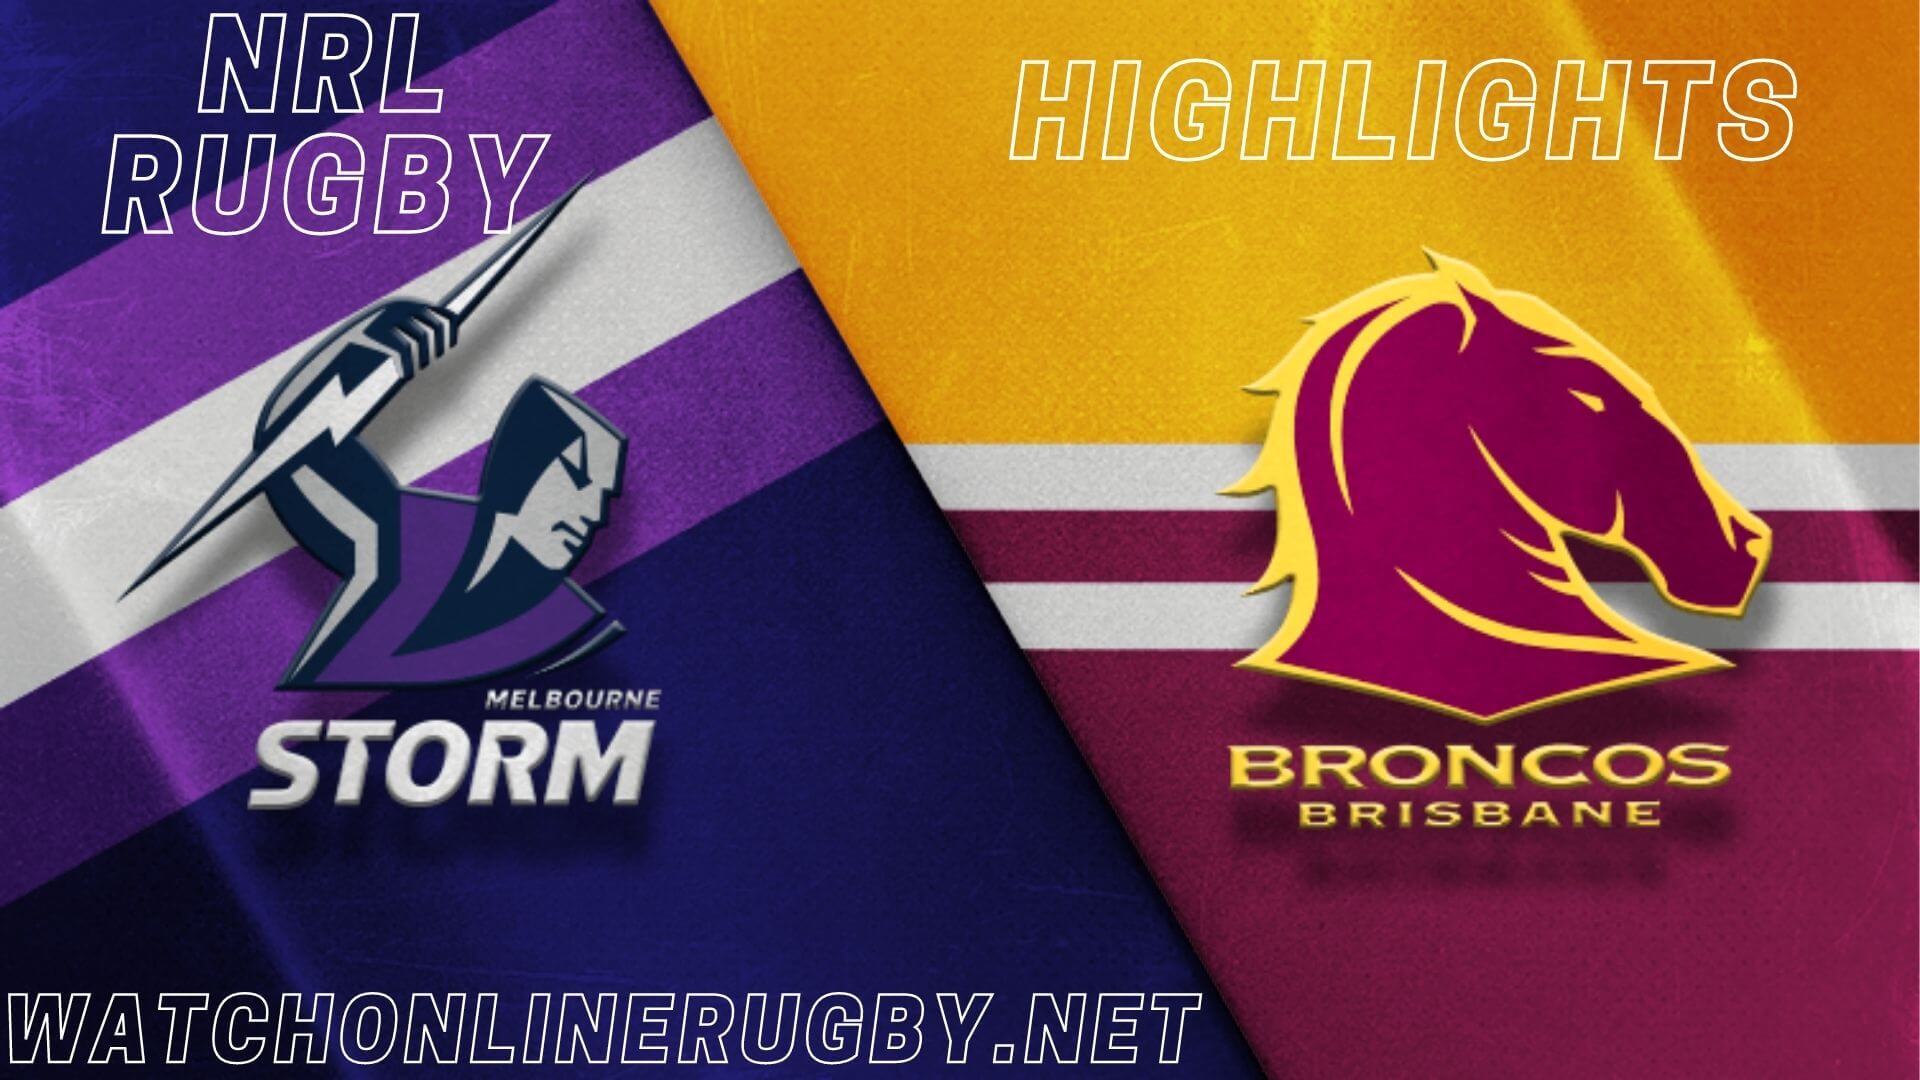 Broncos Vs Storm Highlights RD 23 NRL Rugby